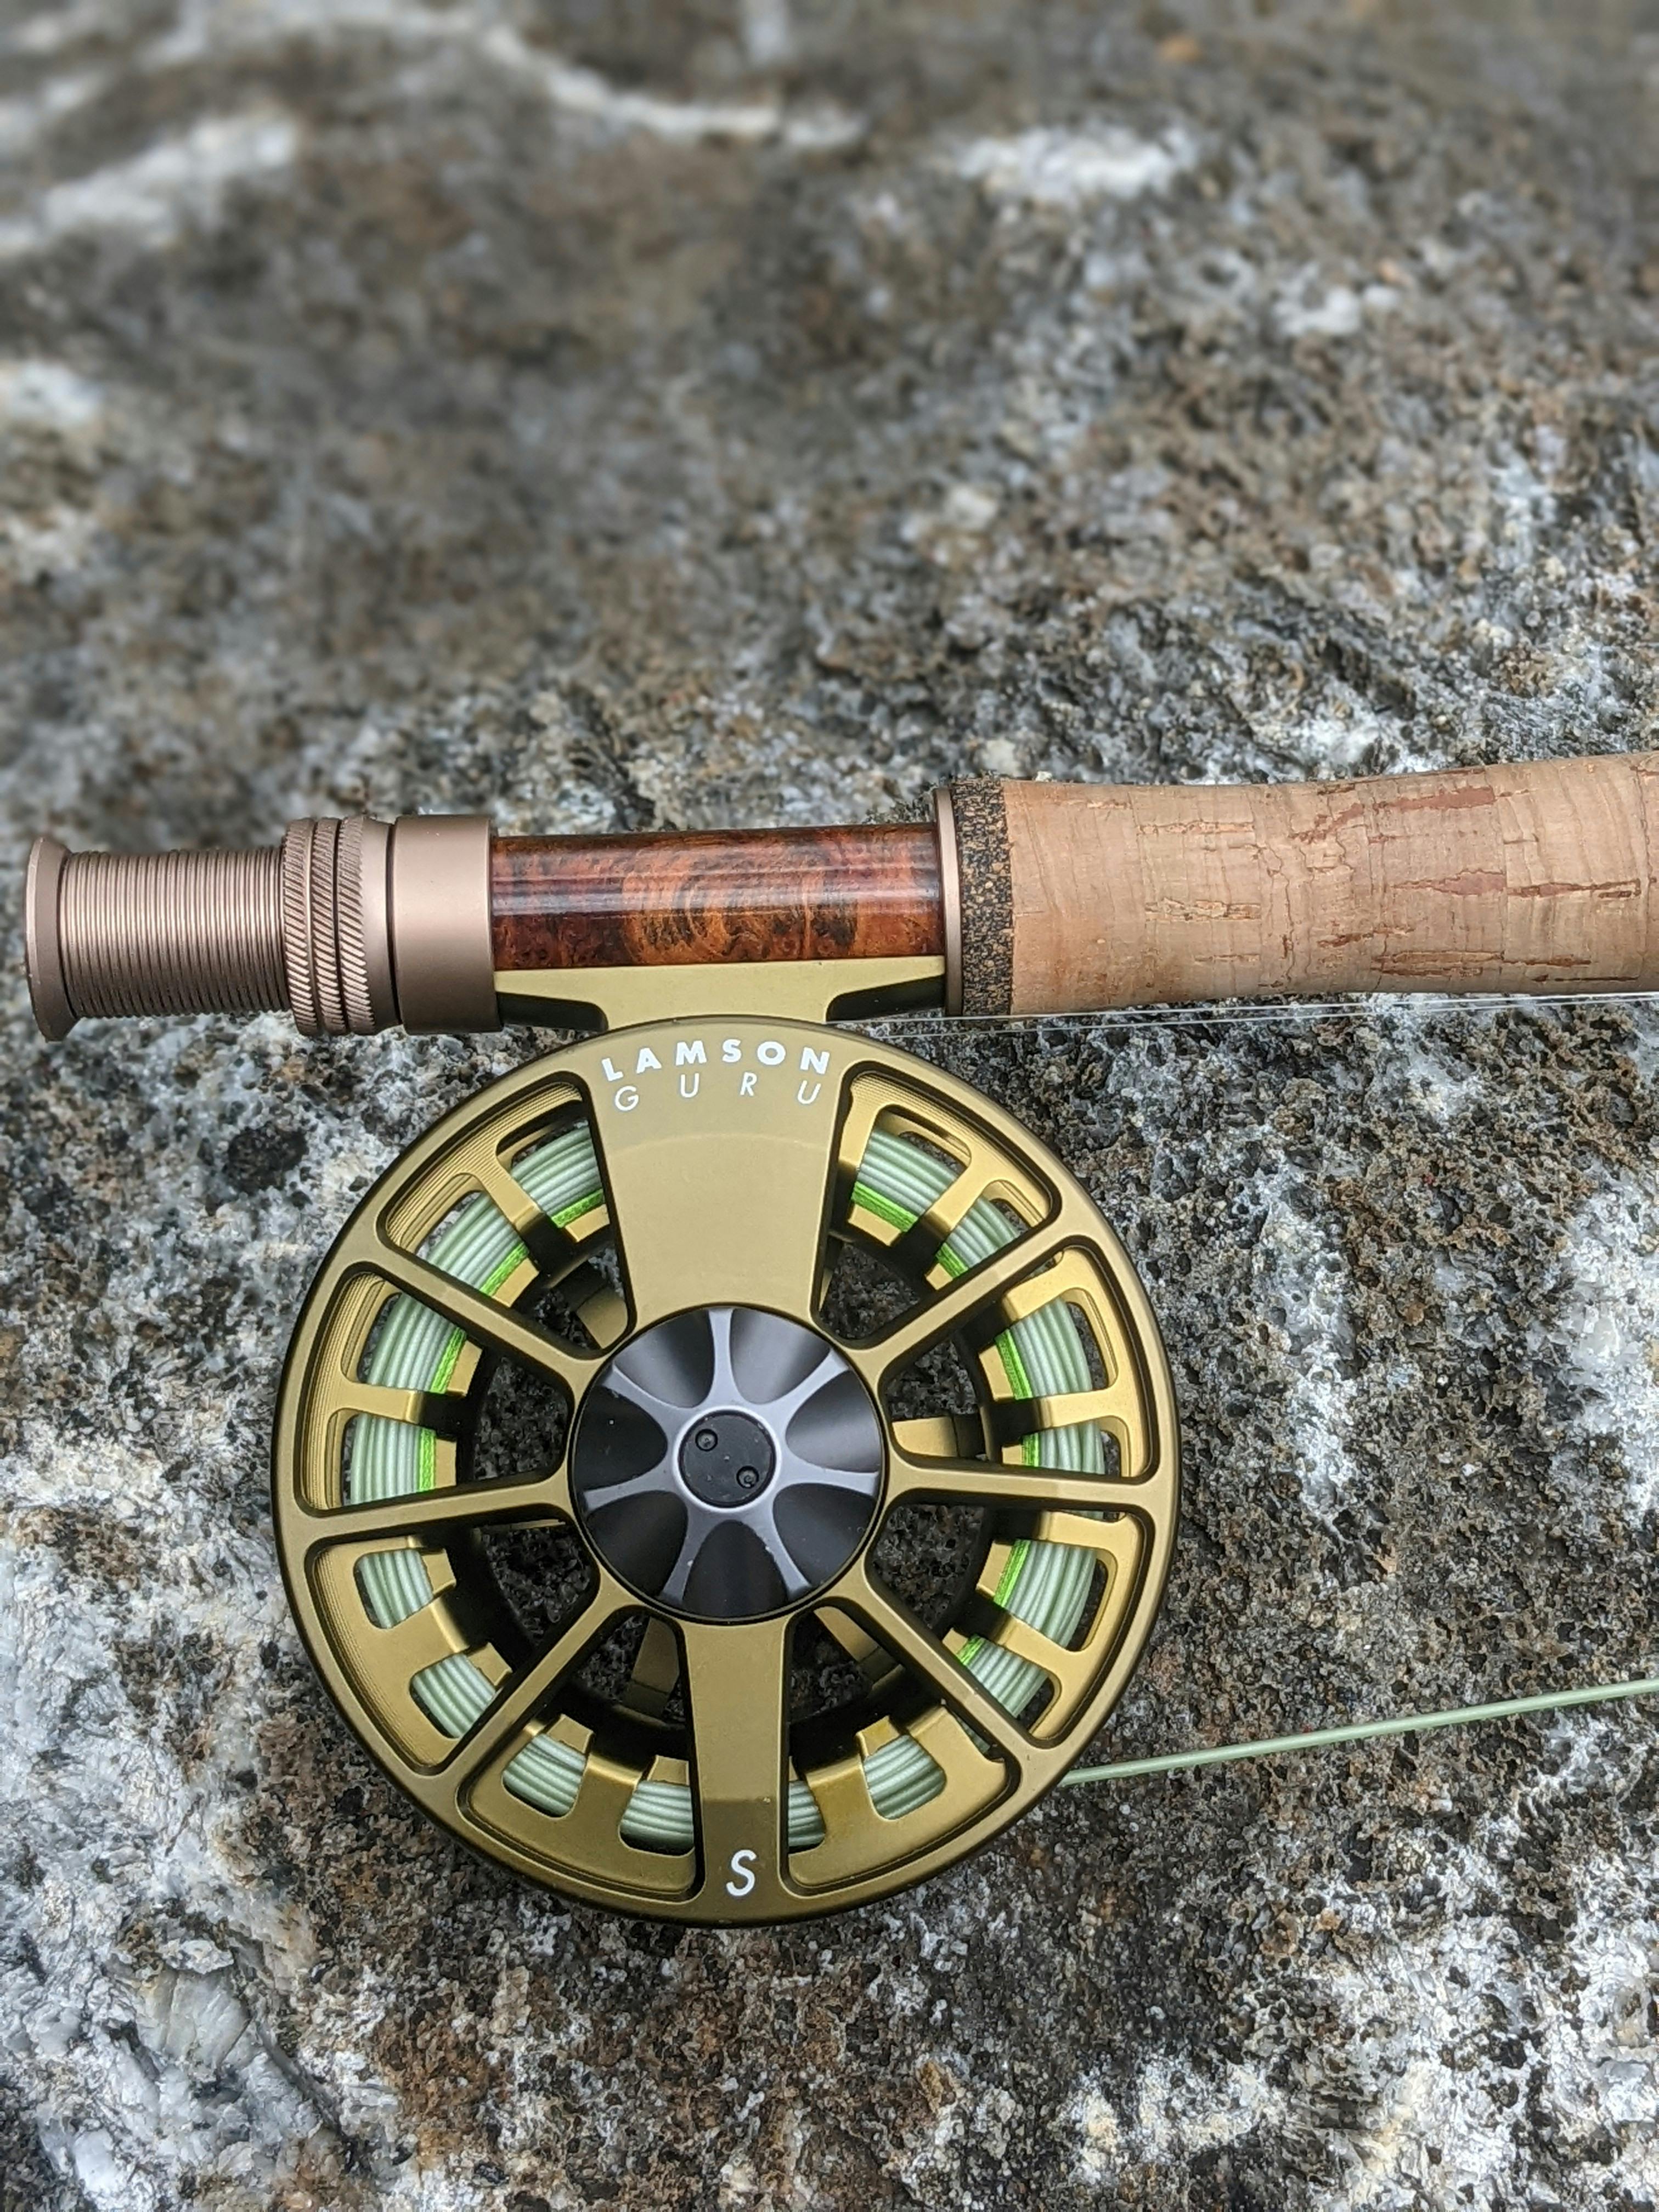 A Lamson Guru fishing reel. 